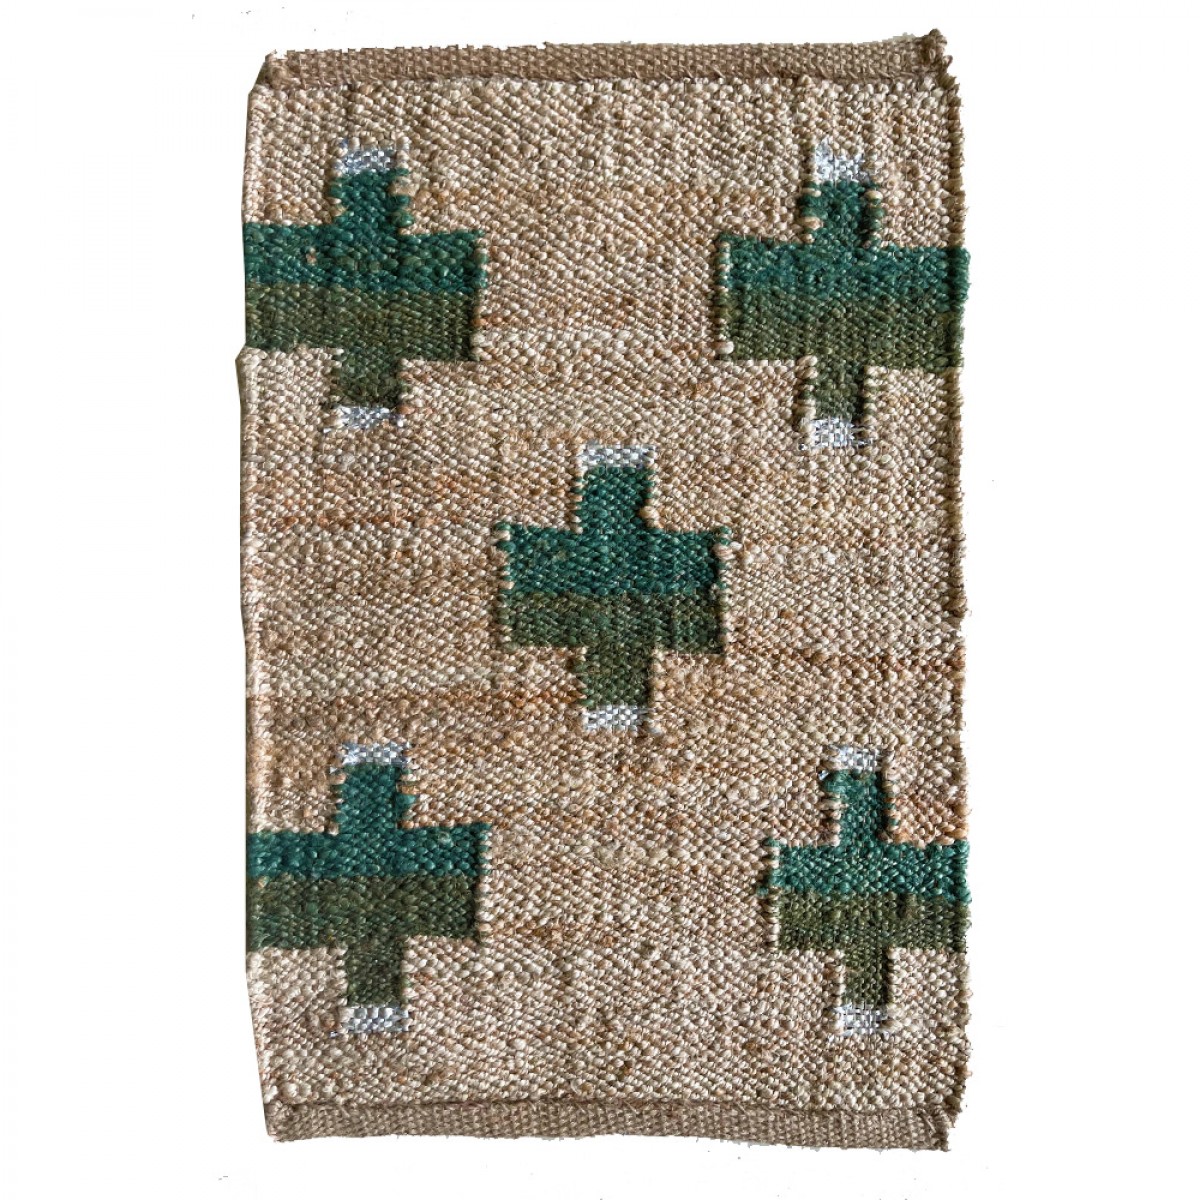 Handmade Natural Fiber Hemp Doormats - Natural & Teal Green